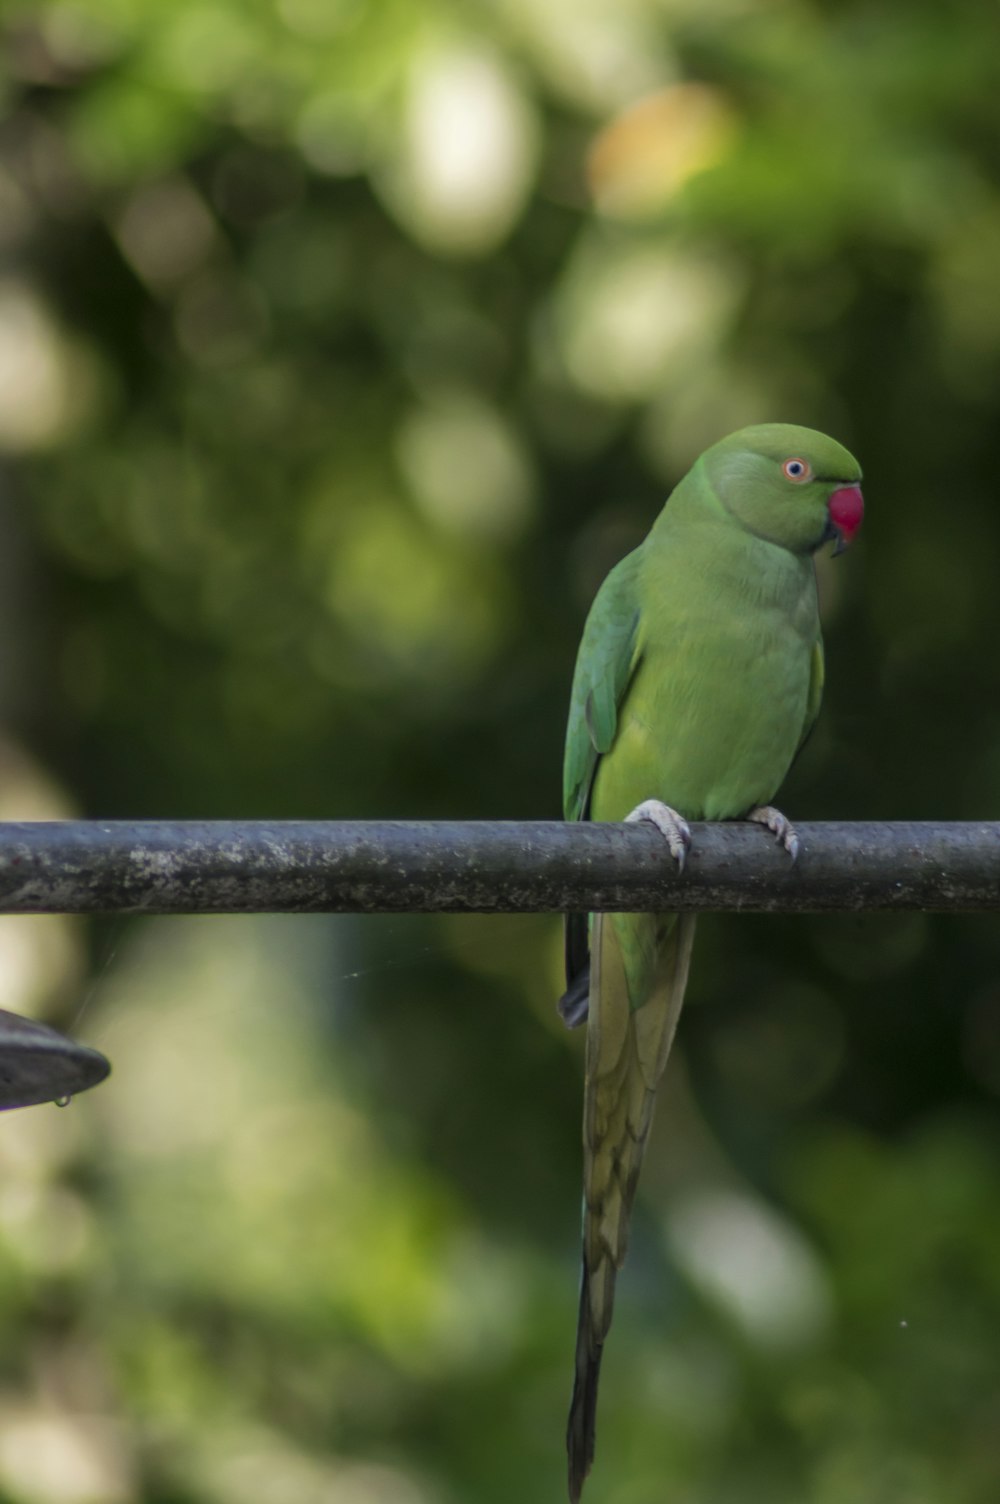 a green bird sitting on top of a metal bar